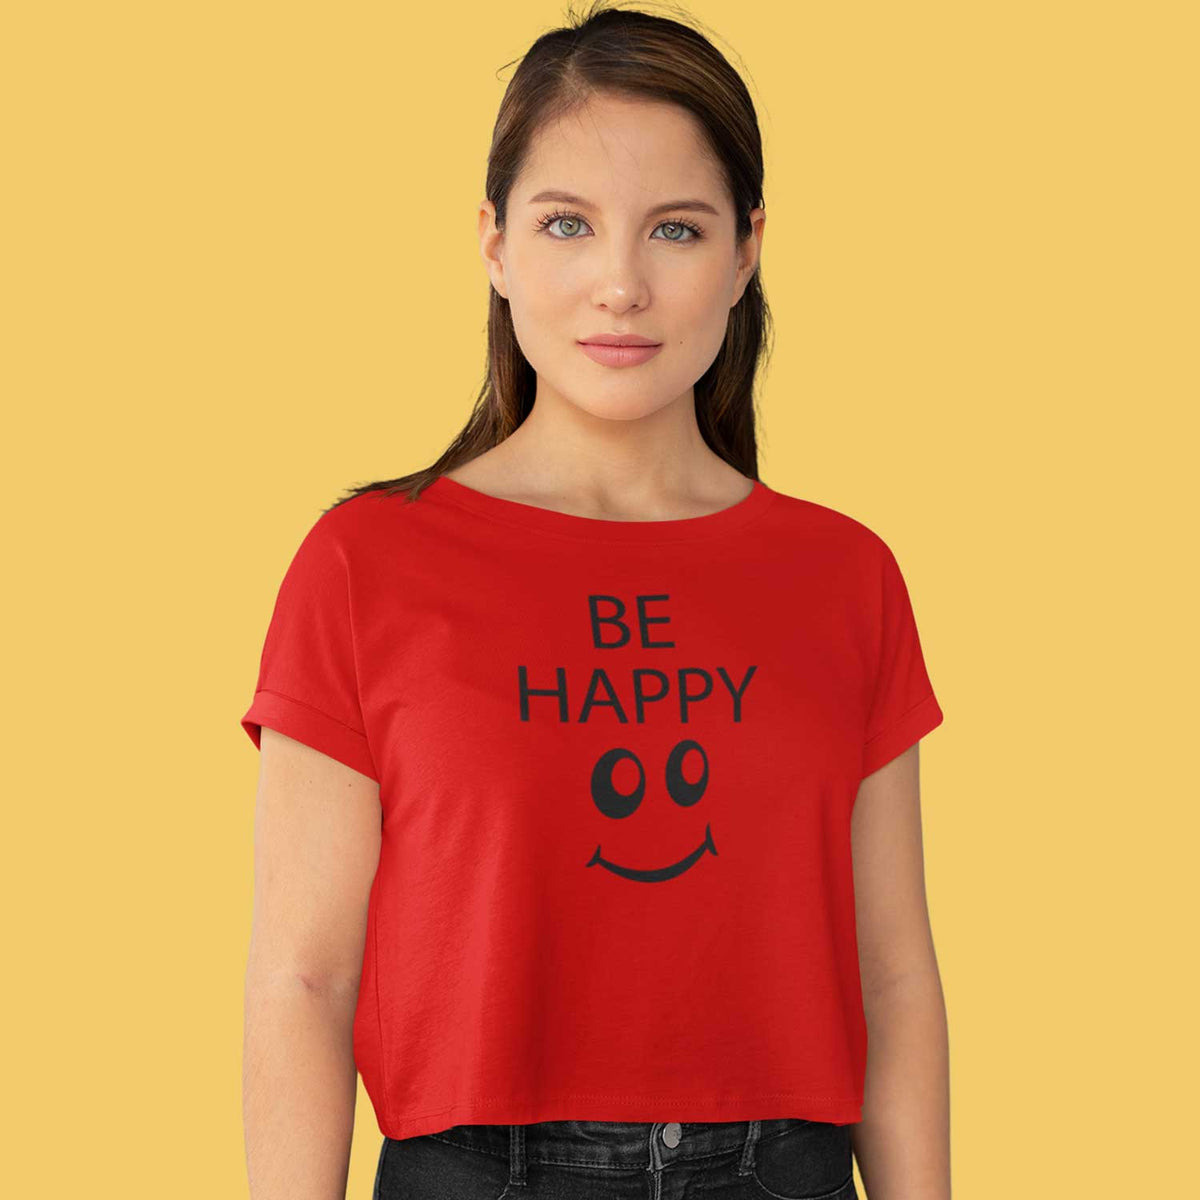 Be Happy Printed Crop Top T-shirt